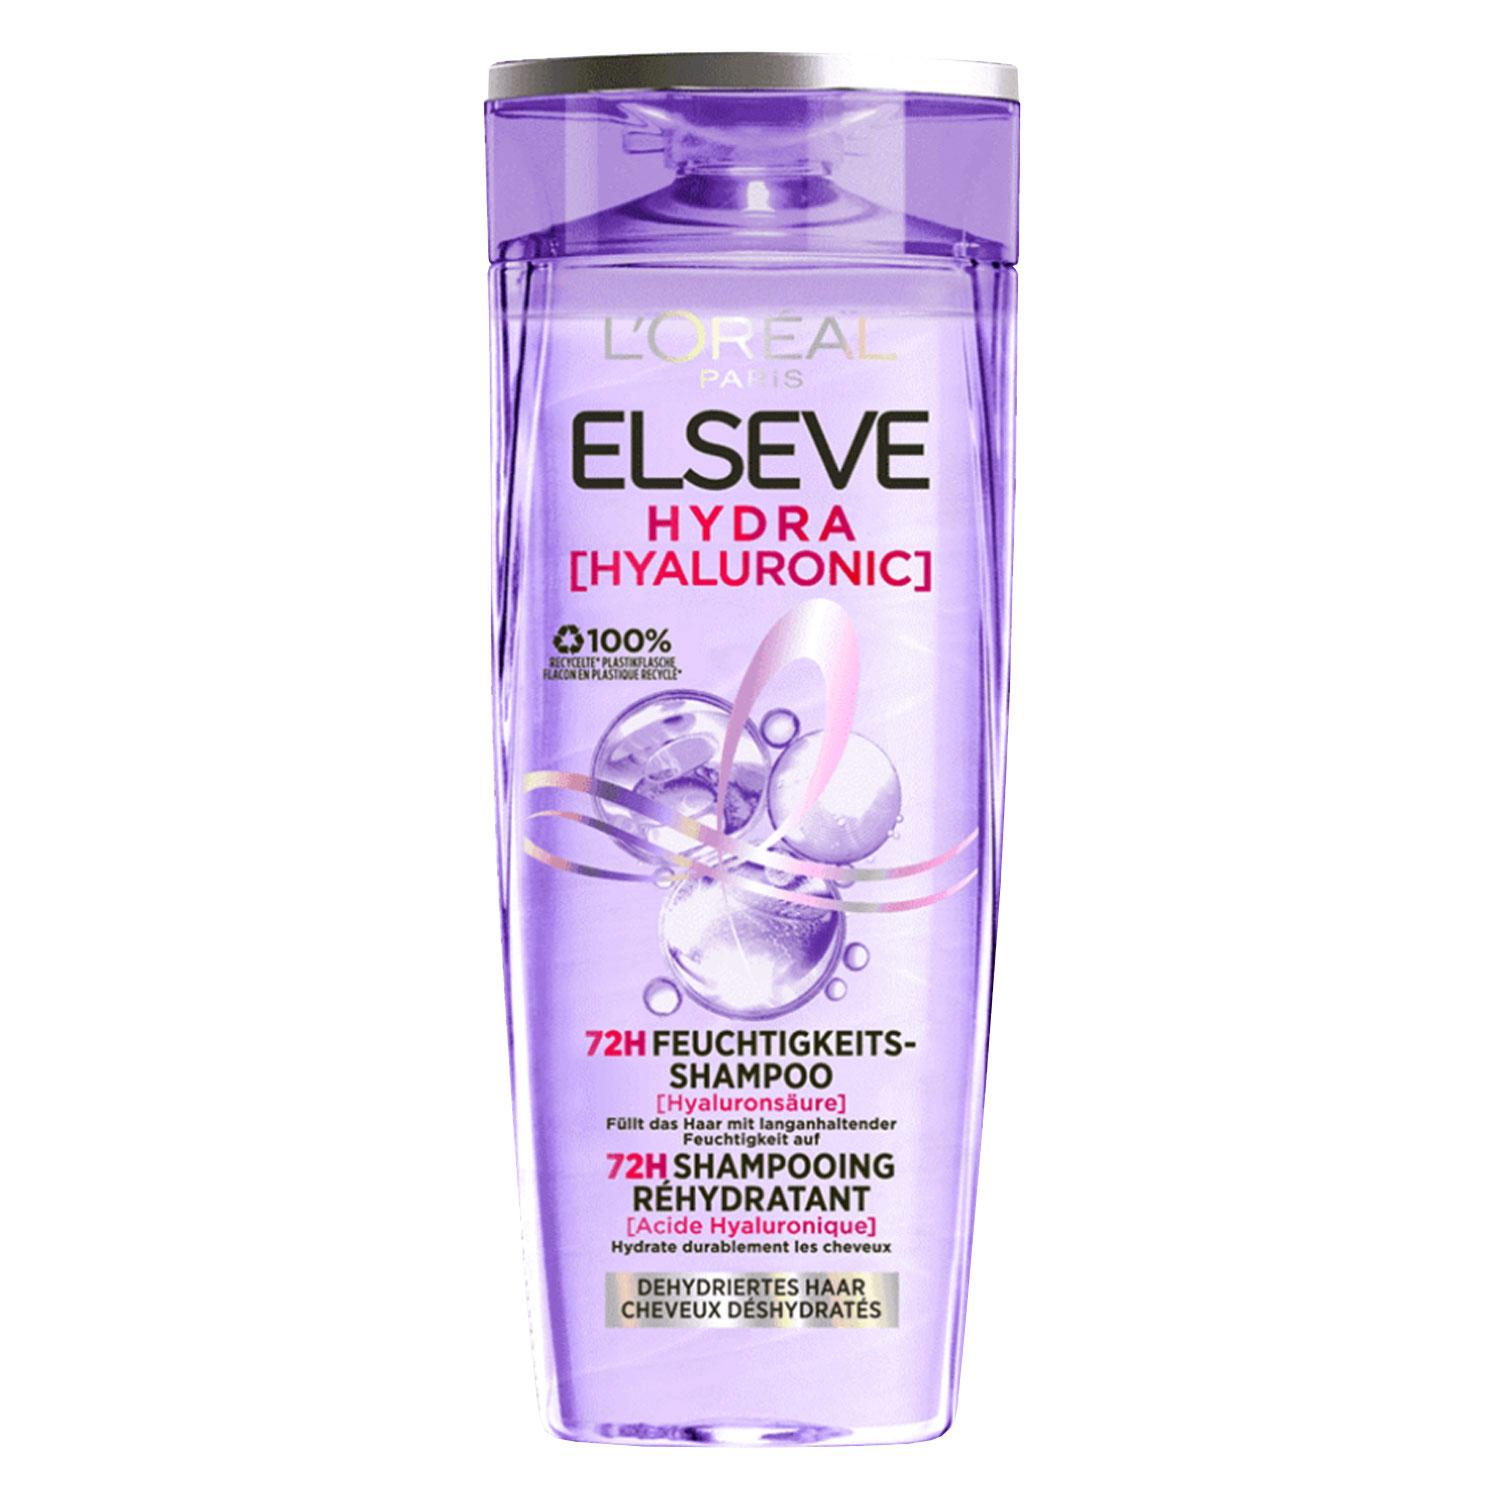 LOréal Elseve Haircare - Hydra Hyaluronic 72H Moisturising Shampoo